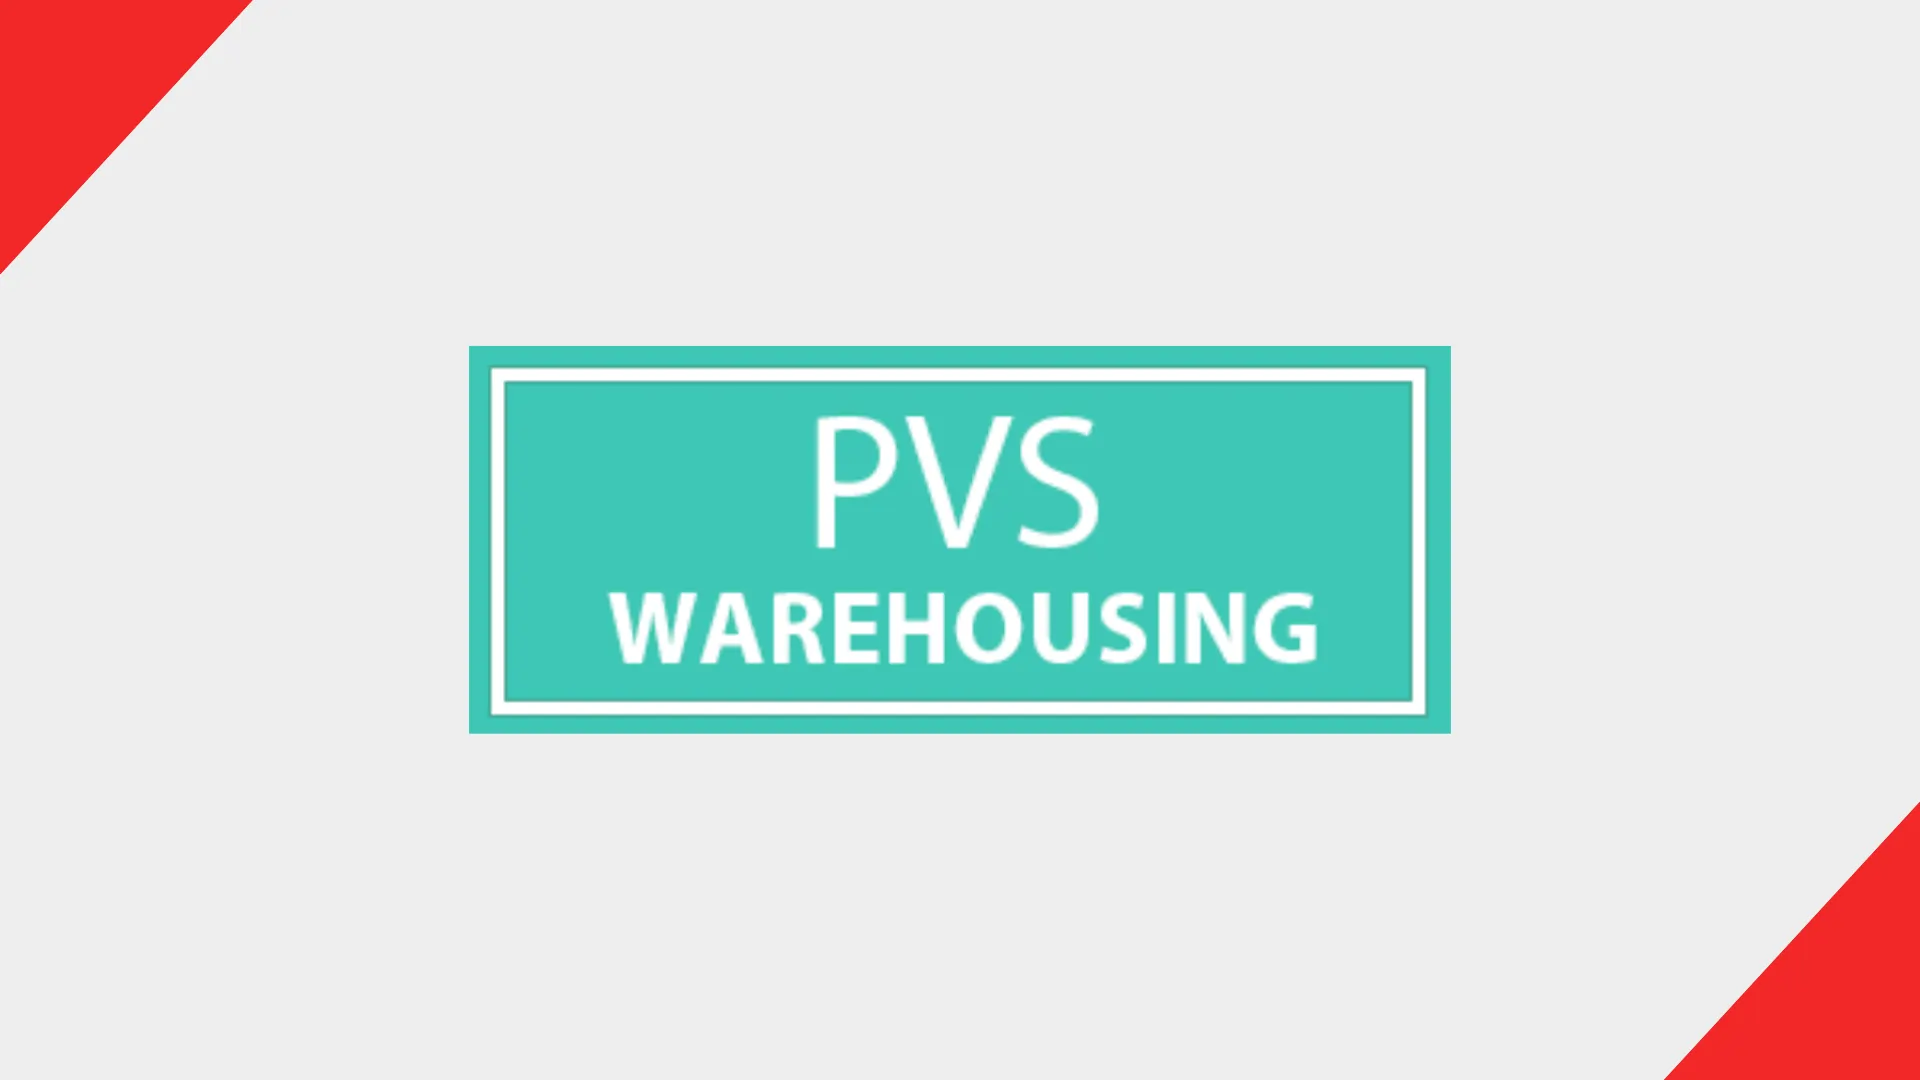 Warehousing Companies in Bangalore PVS Warehousing